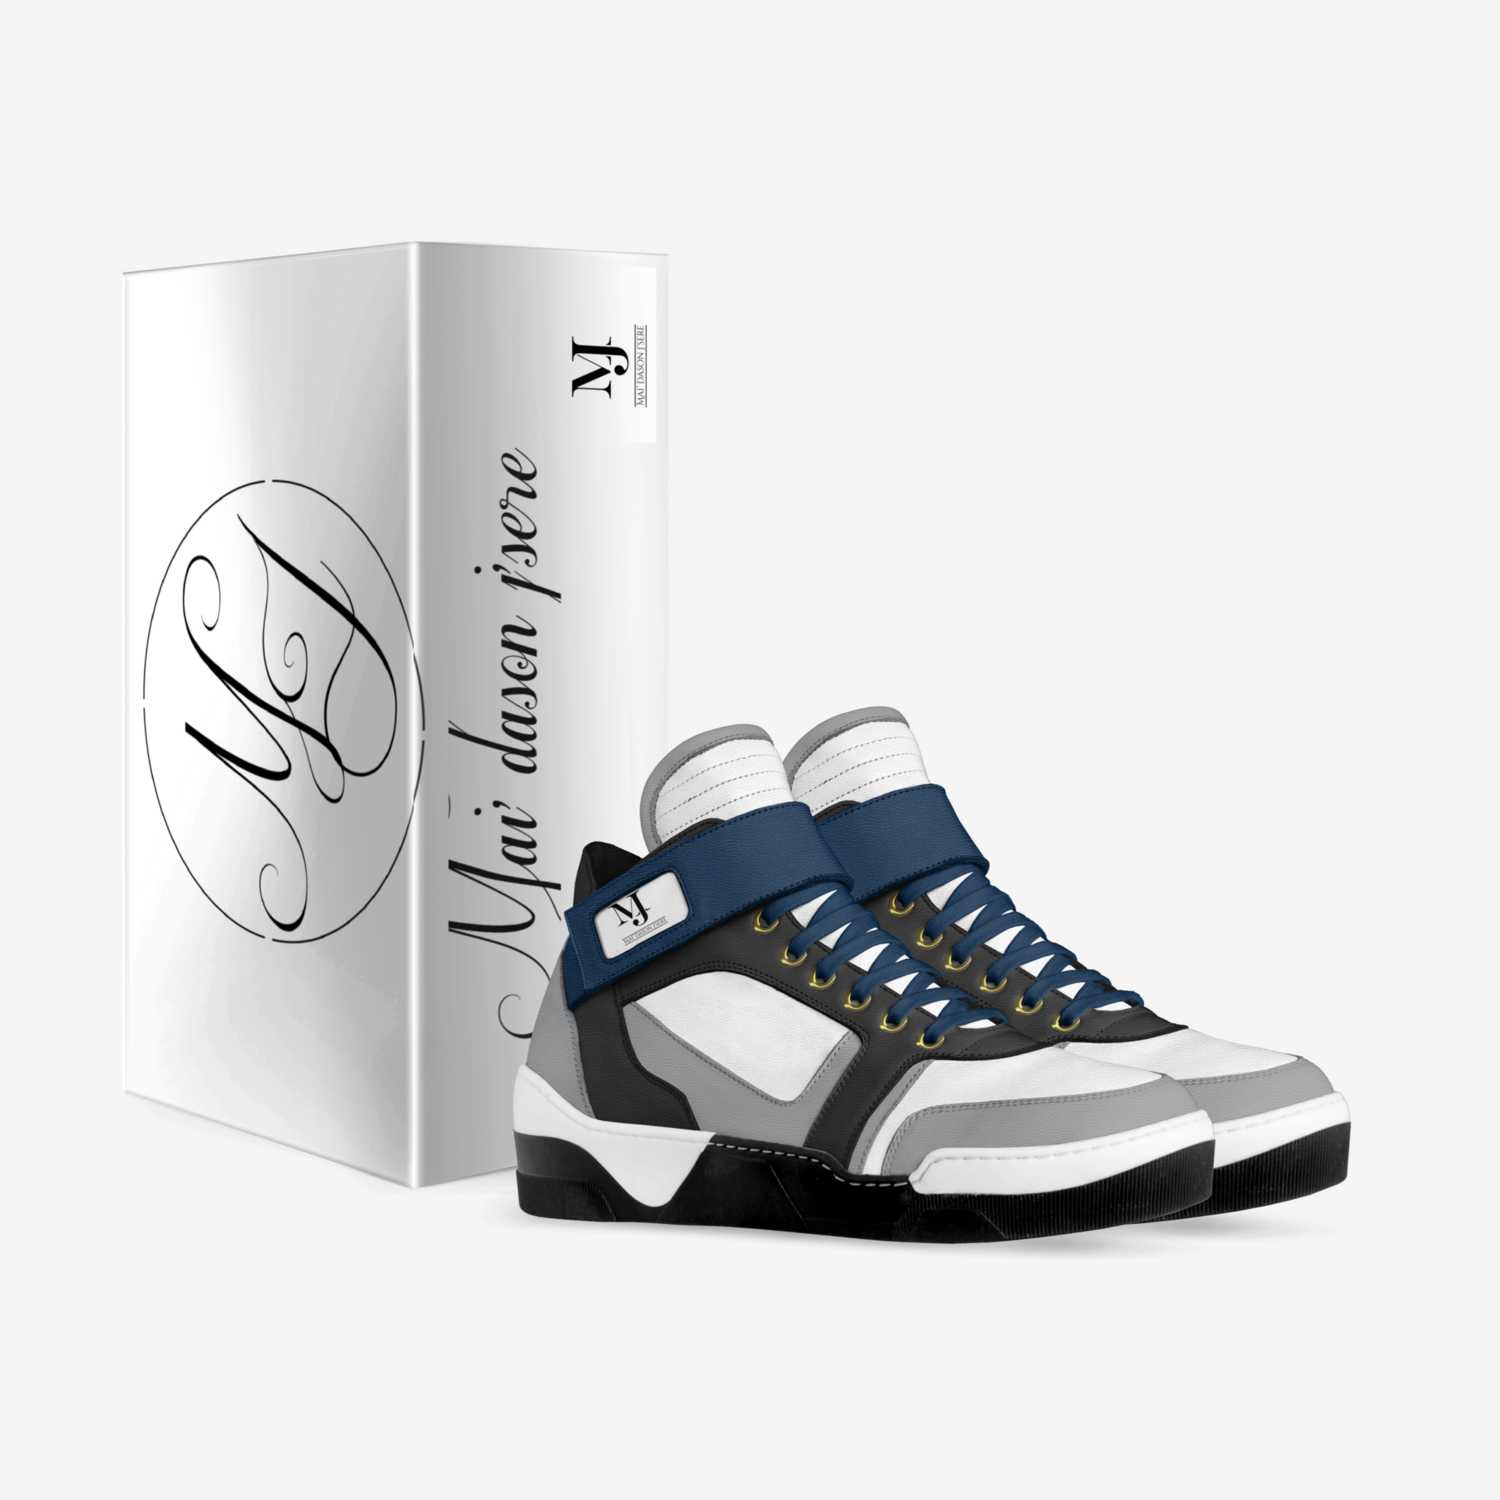 Mai'dason j'sere custom made in Italy shoes by Quame Johnson | Box view